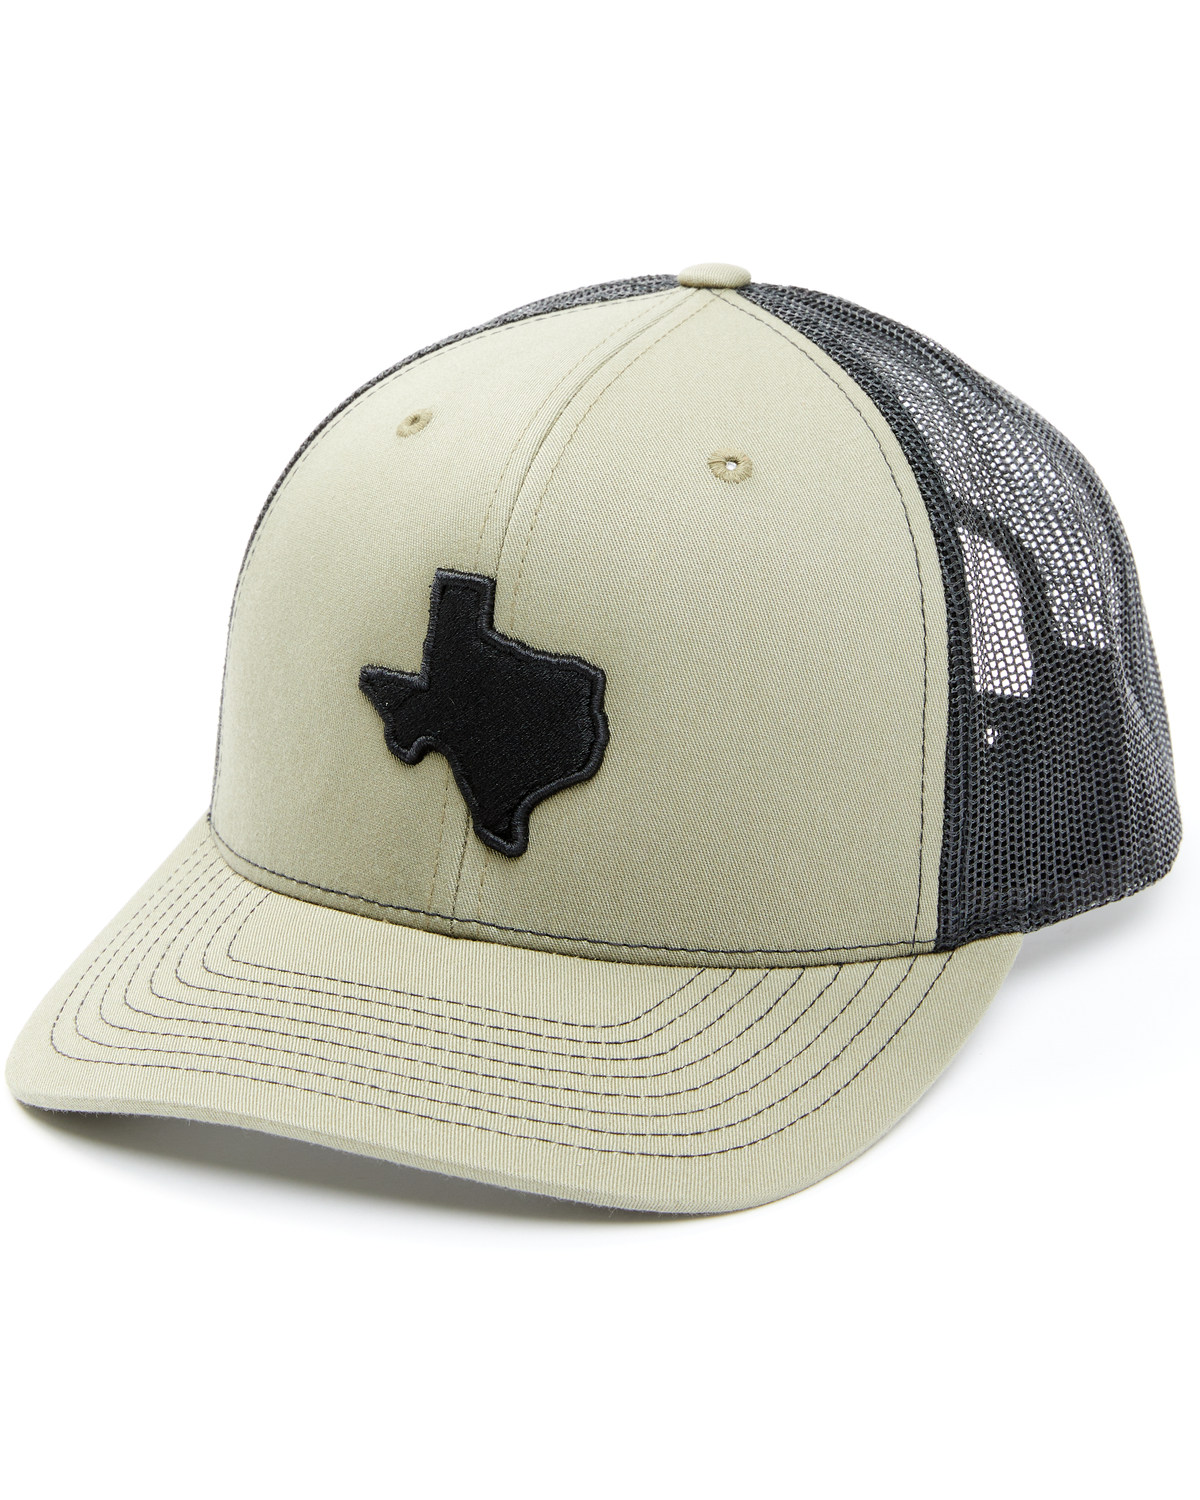 Oil Field Hats Men's Olive Texas Patch Mesh-Back Ball Cap